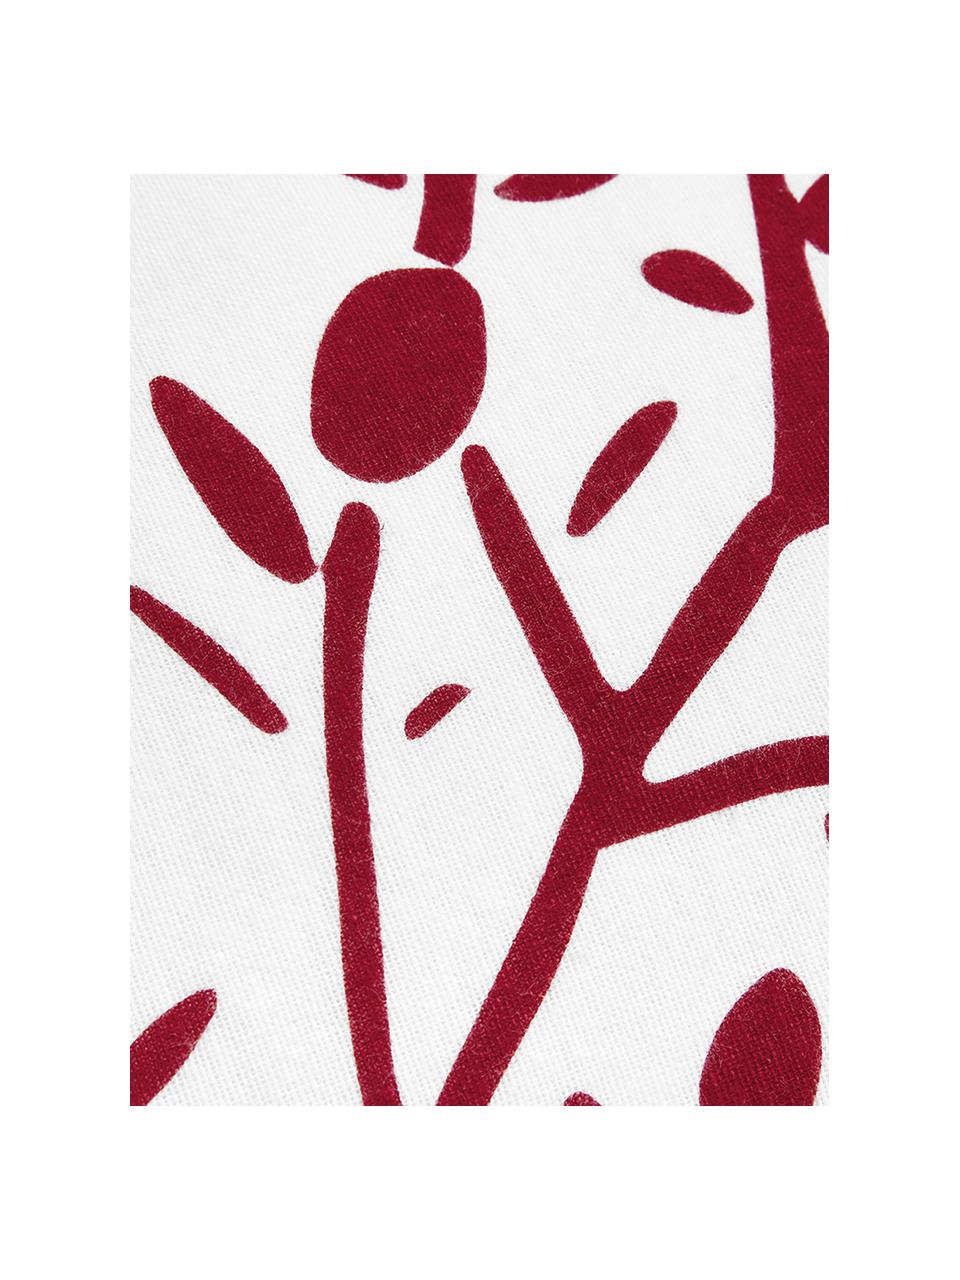 Flanell-Bettwäsche Mistletoe, Webart: Flanell Flanell ist ein k, Weiss, Rot, 240 x 220 cm + 2 Kissen 80 x 80 cm